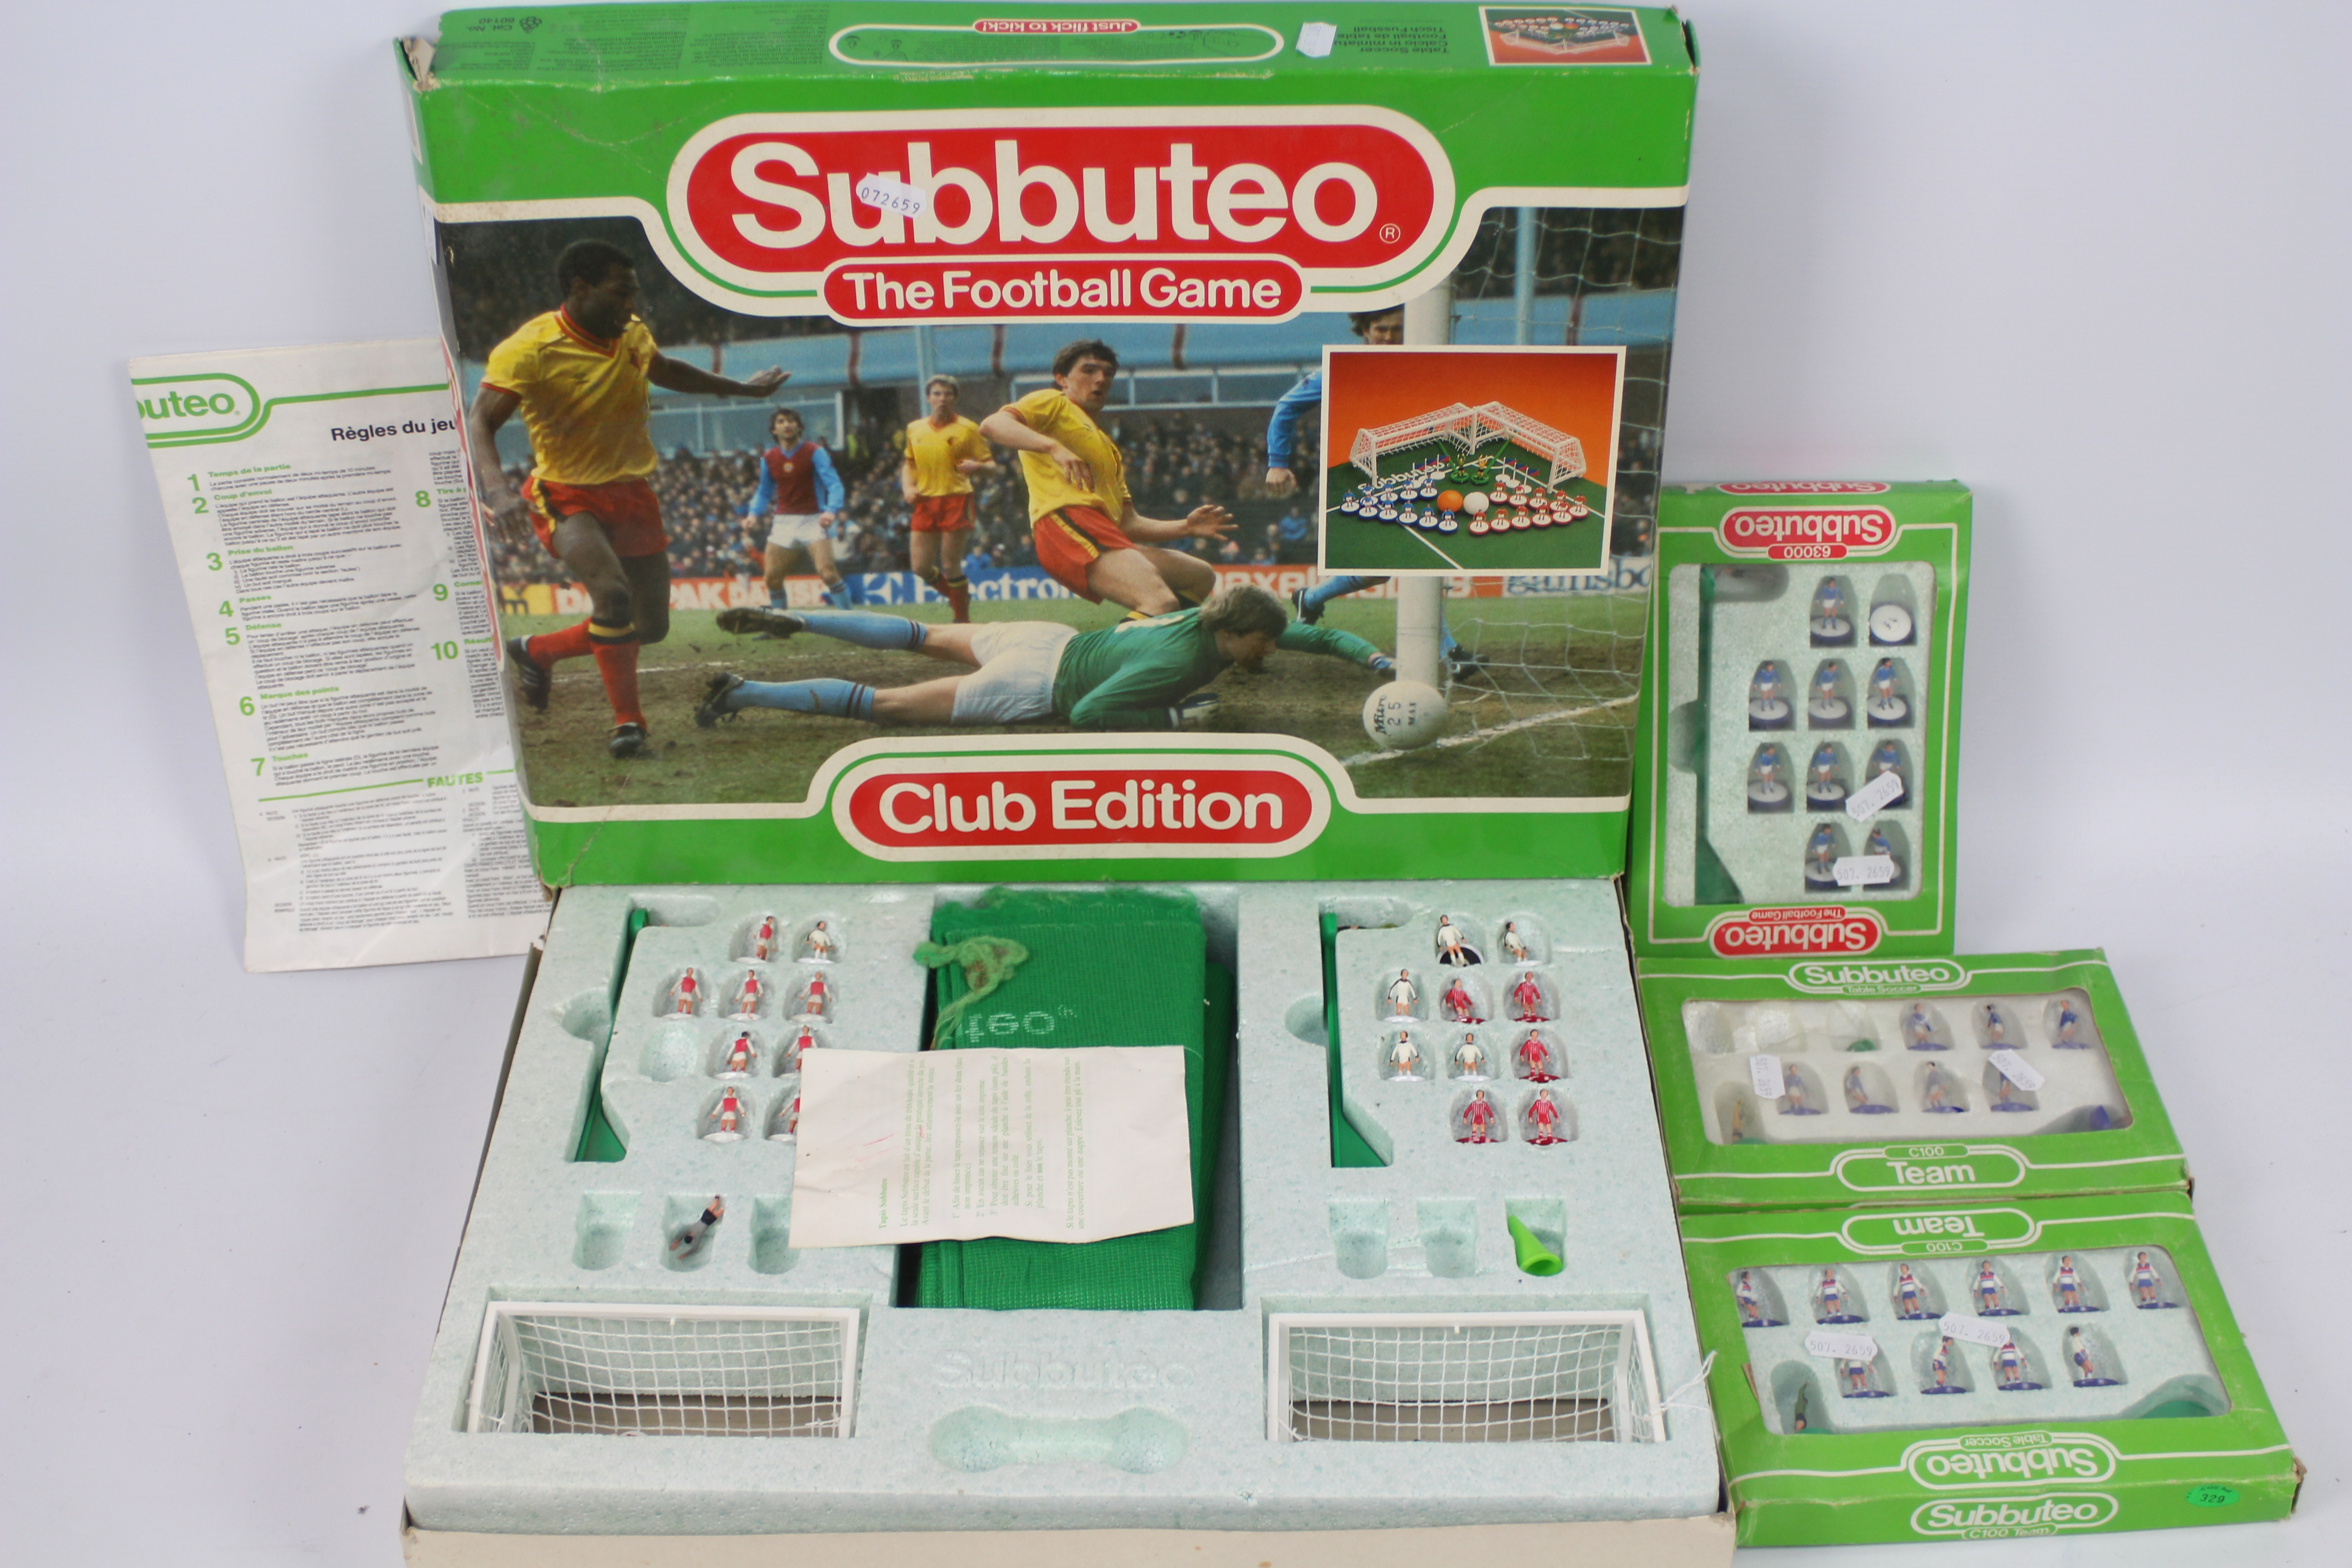 Subbuteo - Club Edition - Waddington. A Subbuteo Club Edition game set by Waddington.